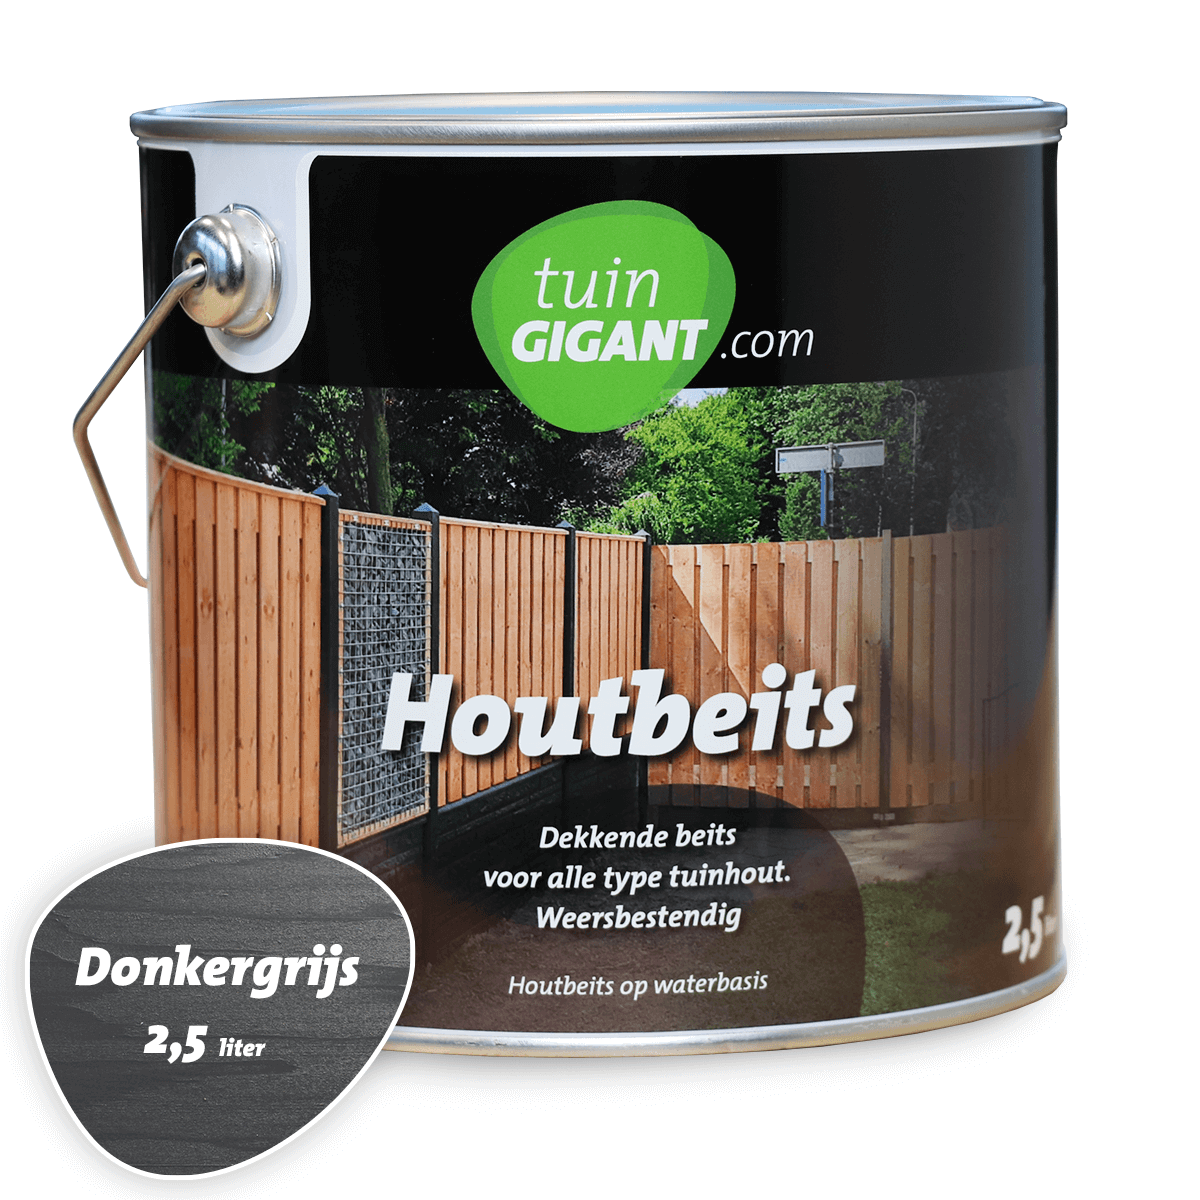 boiler crisis Ruïneren Houtbeits - Donkergrijs - 1 tot 2,5 liter - Tuingigant.com